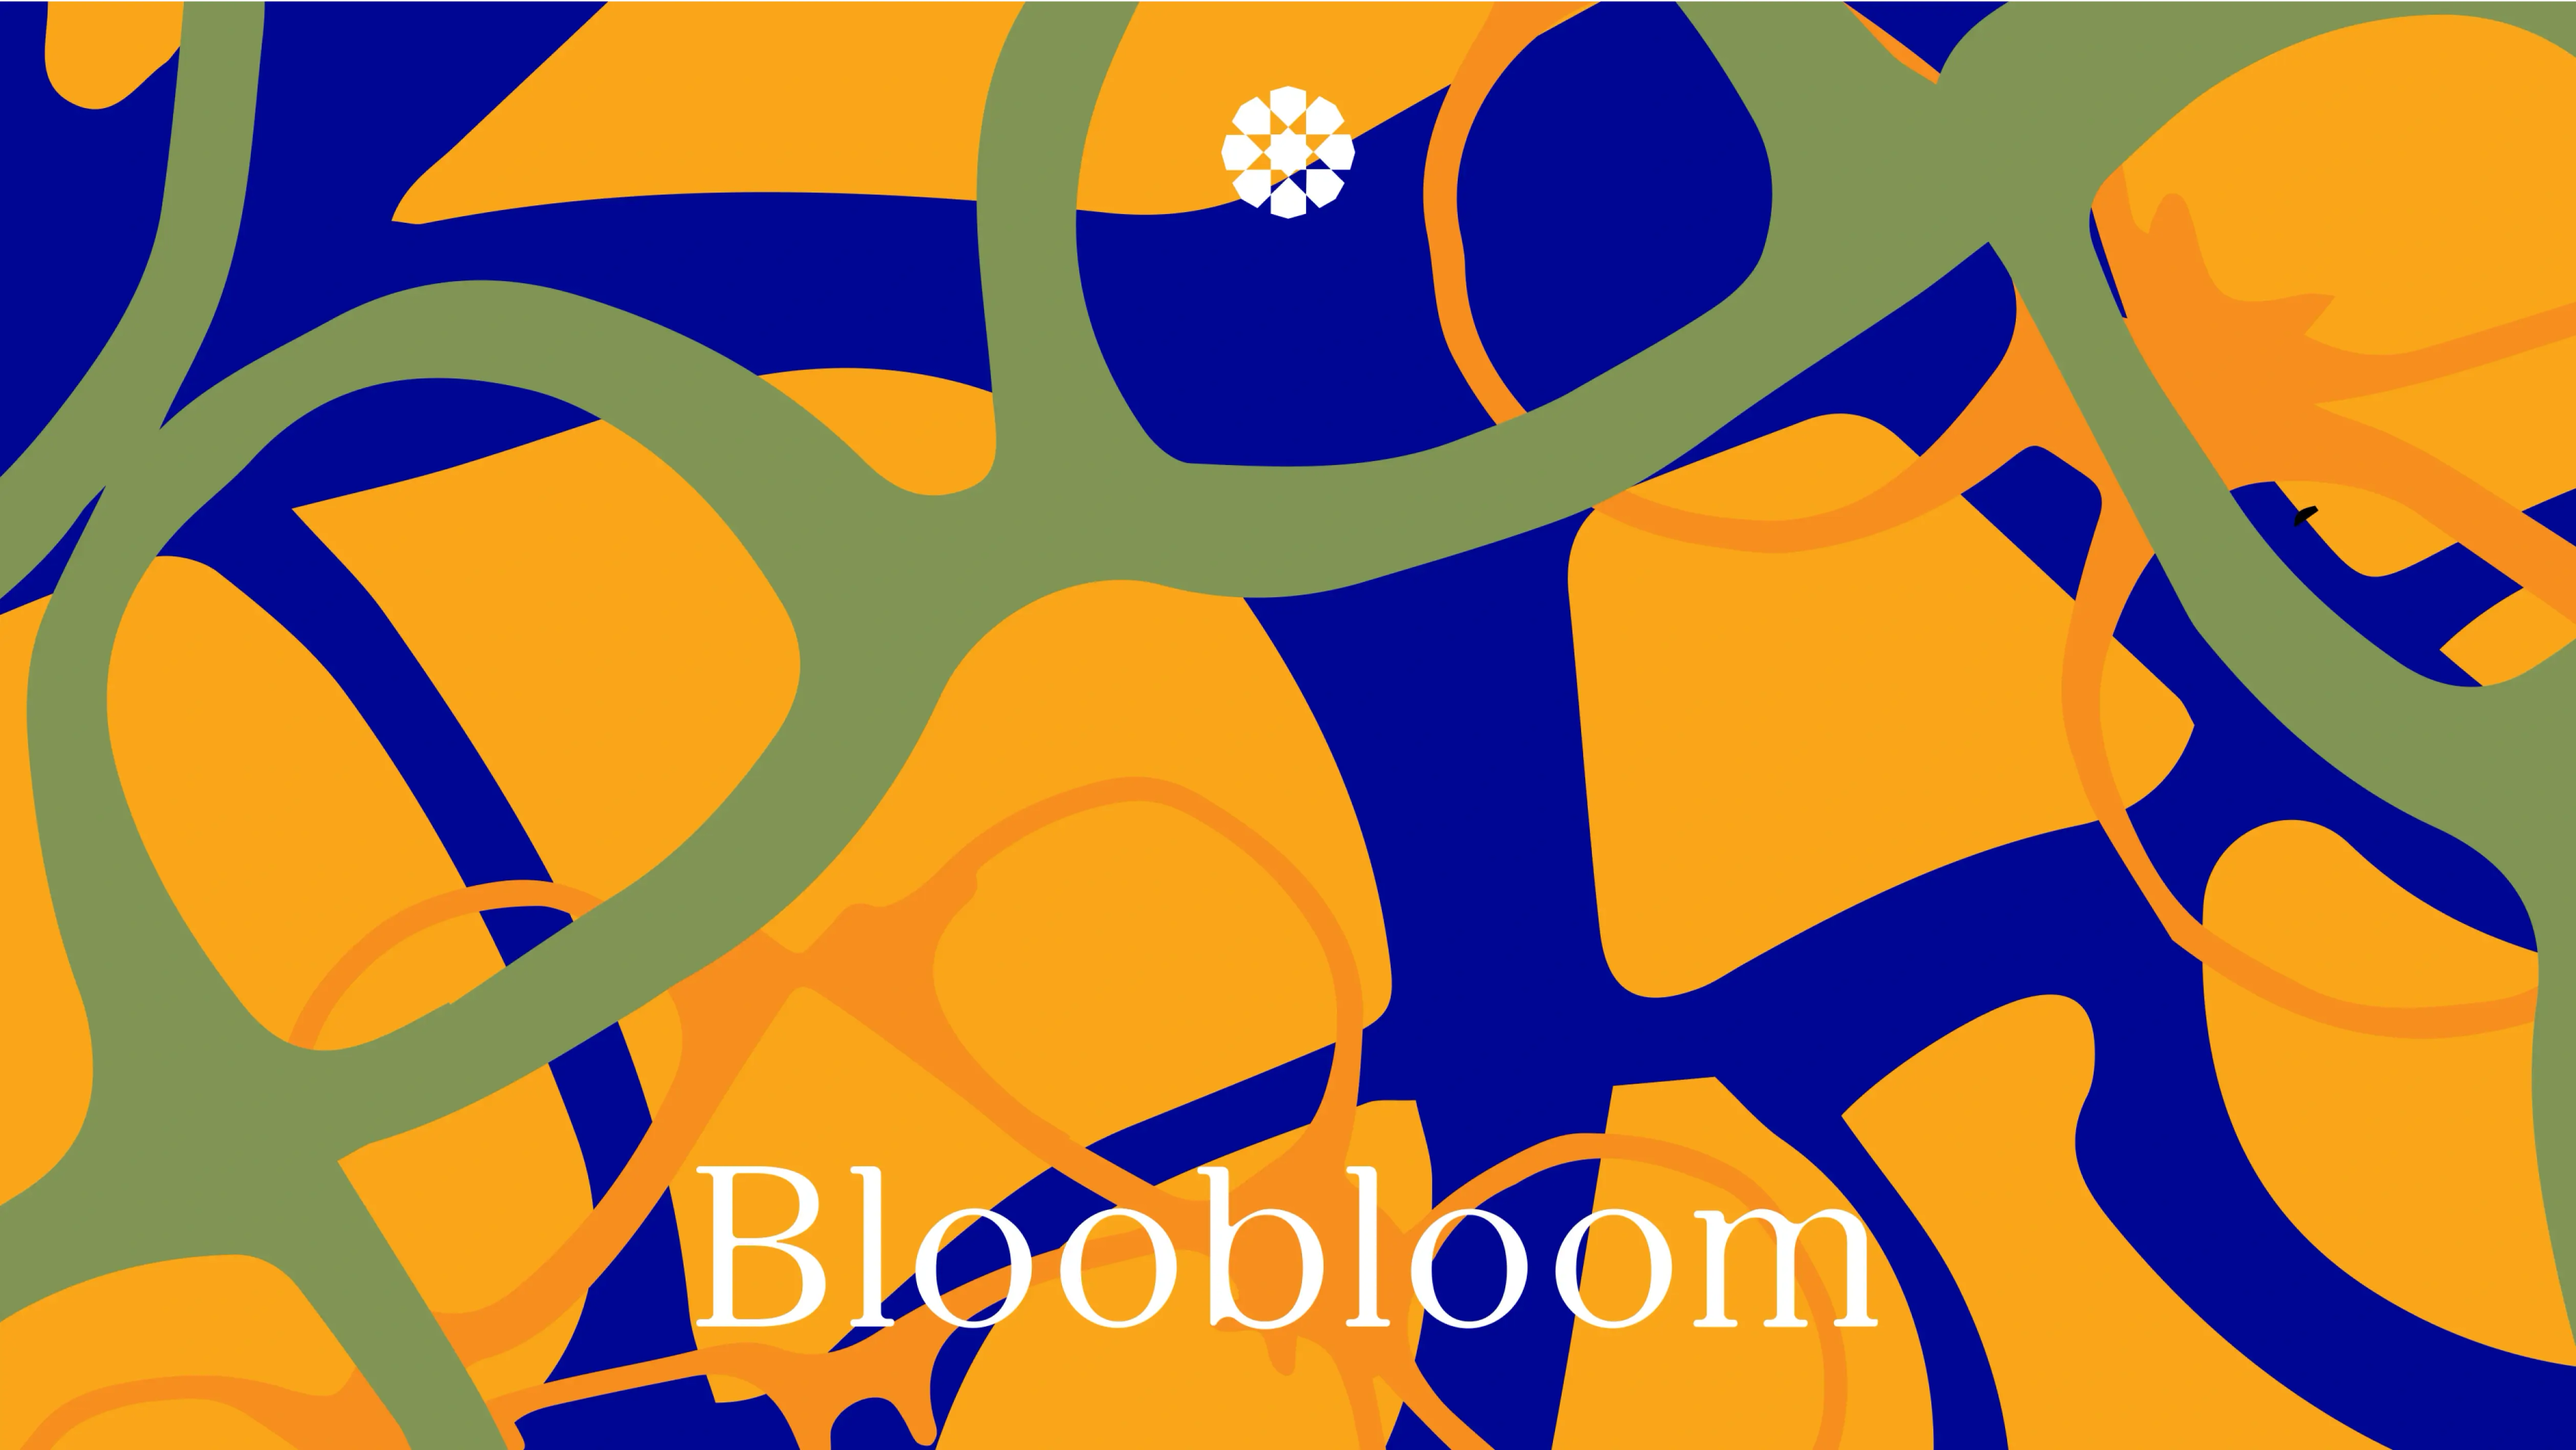 Bloobloom branding illustration design by Bodkin Studio